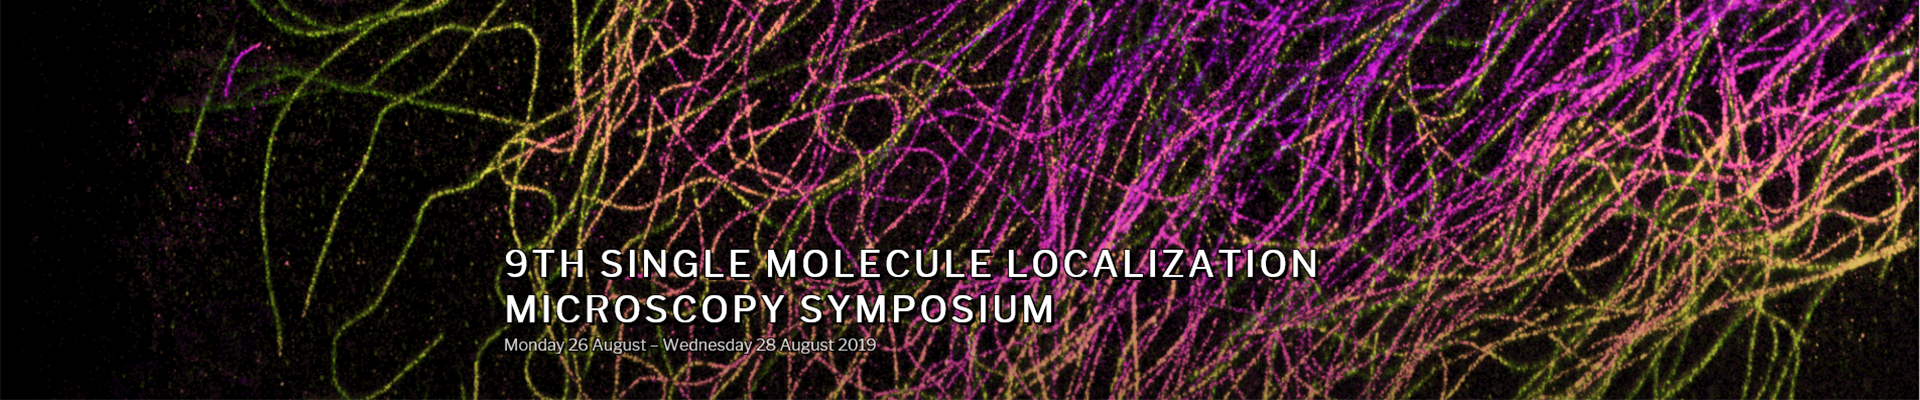 9th Single Molecule Localization Microscopy Symposium